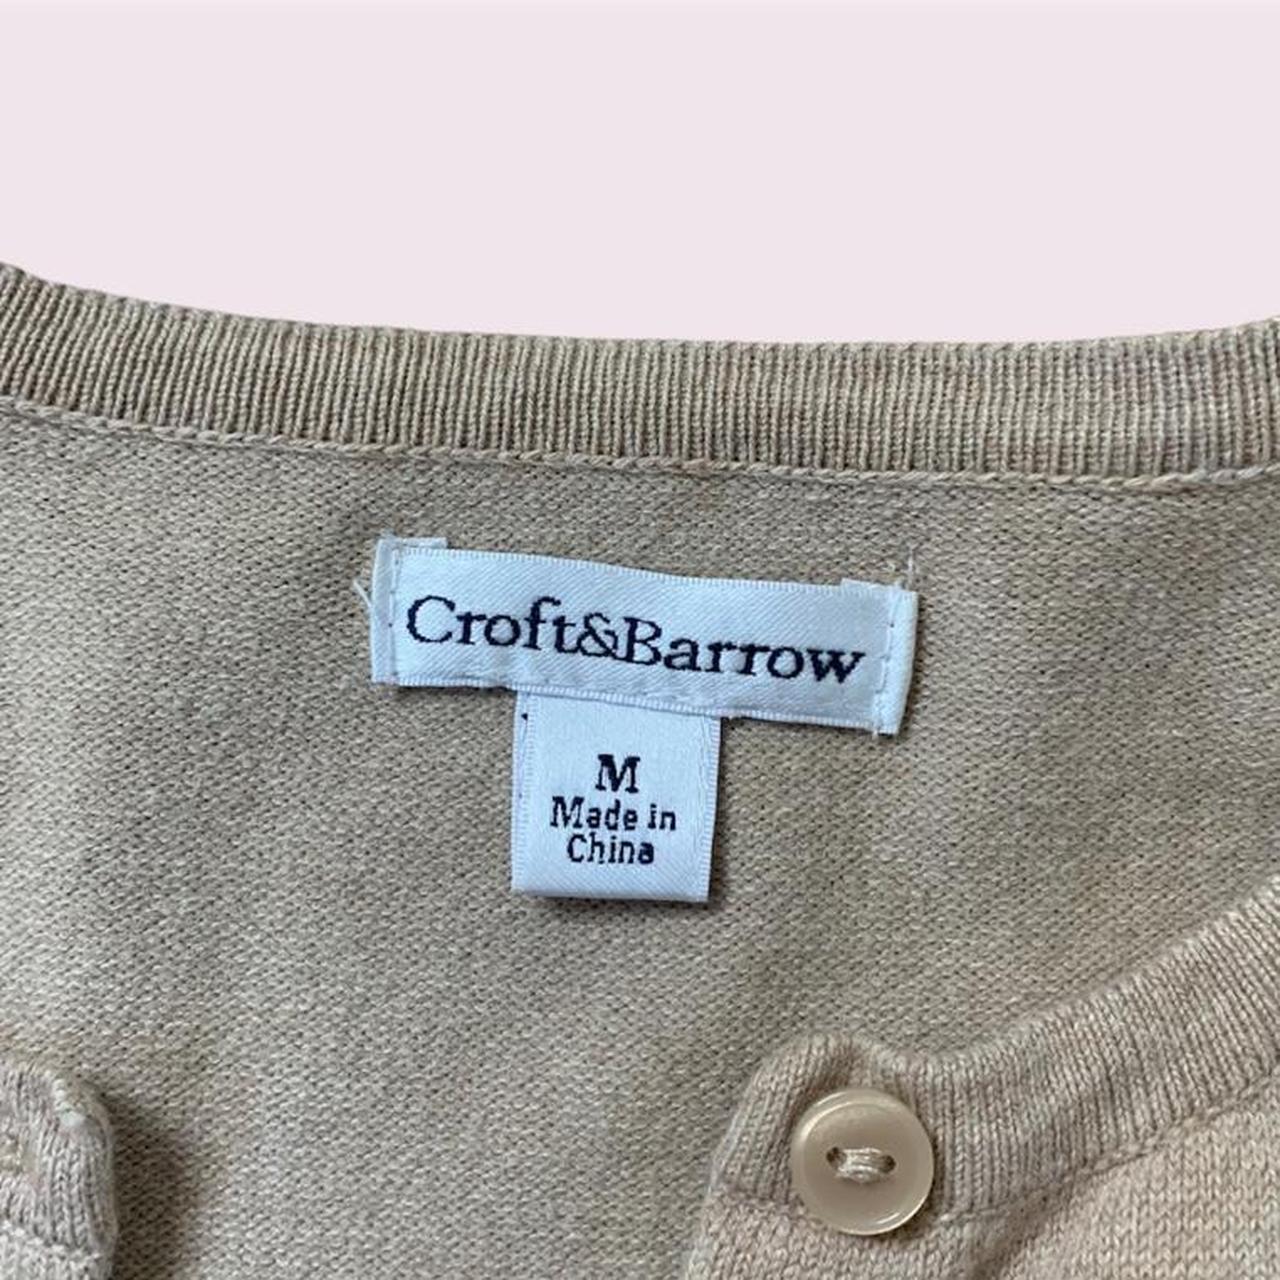 Product Image 4 - ✨ Croft&Barrow beige cardigan✨

-size m
-great